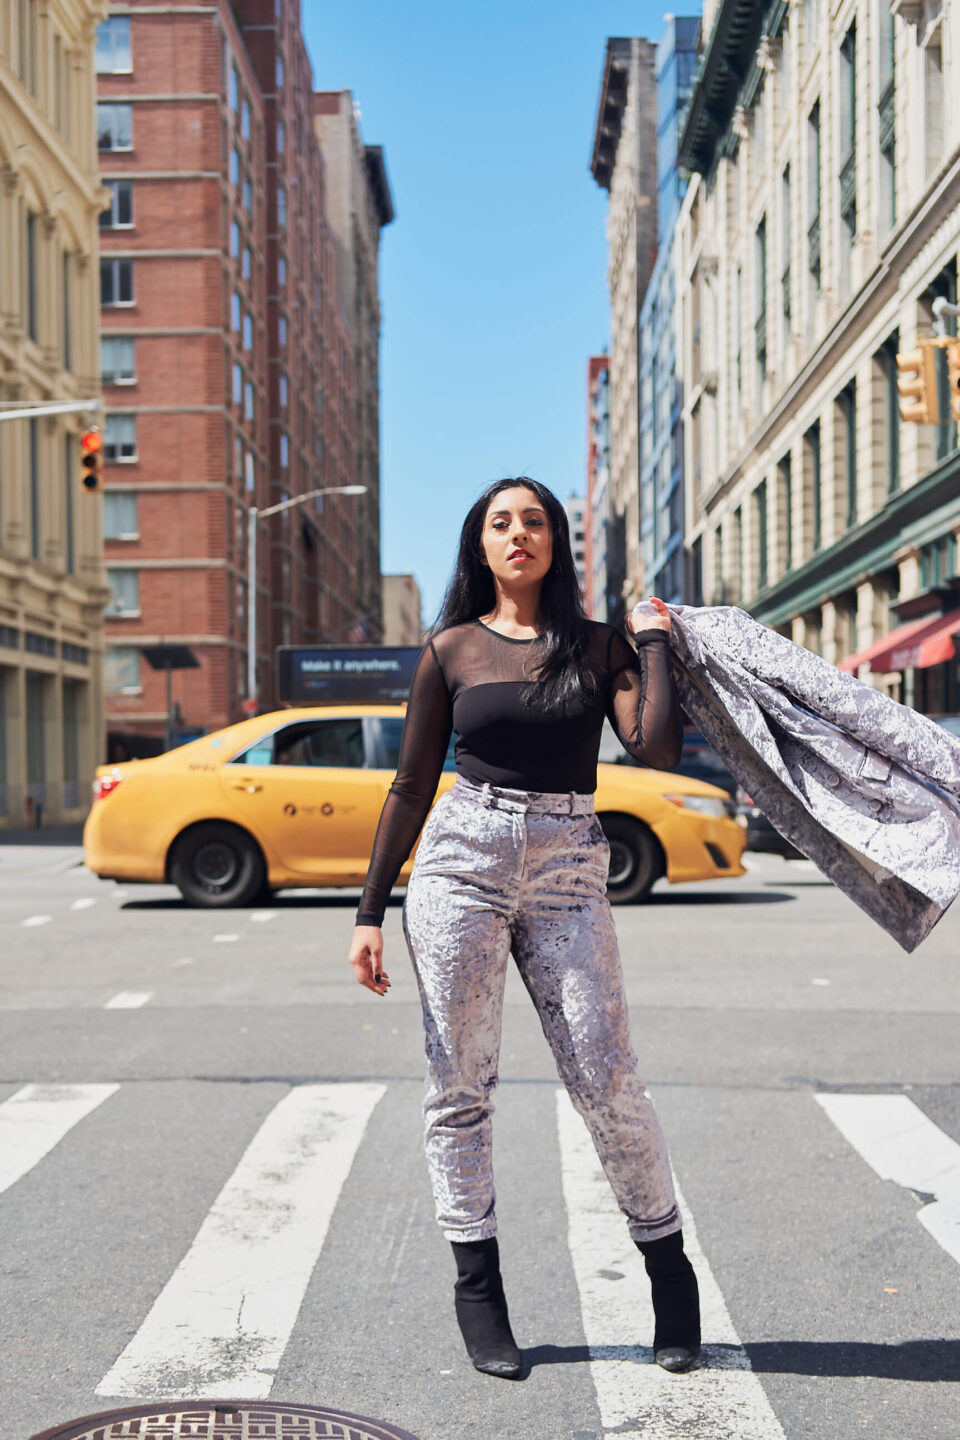 Jessie B - Women's Fashion Photography - Lifestyle Photography - Portrait Photography - Urban Fashion Photography - Flatiron District New York